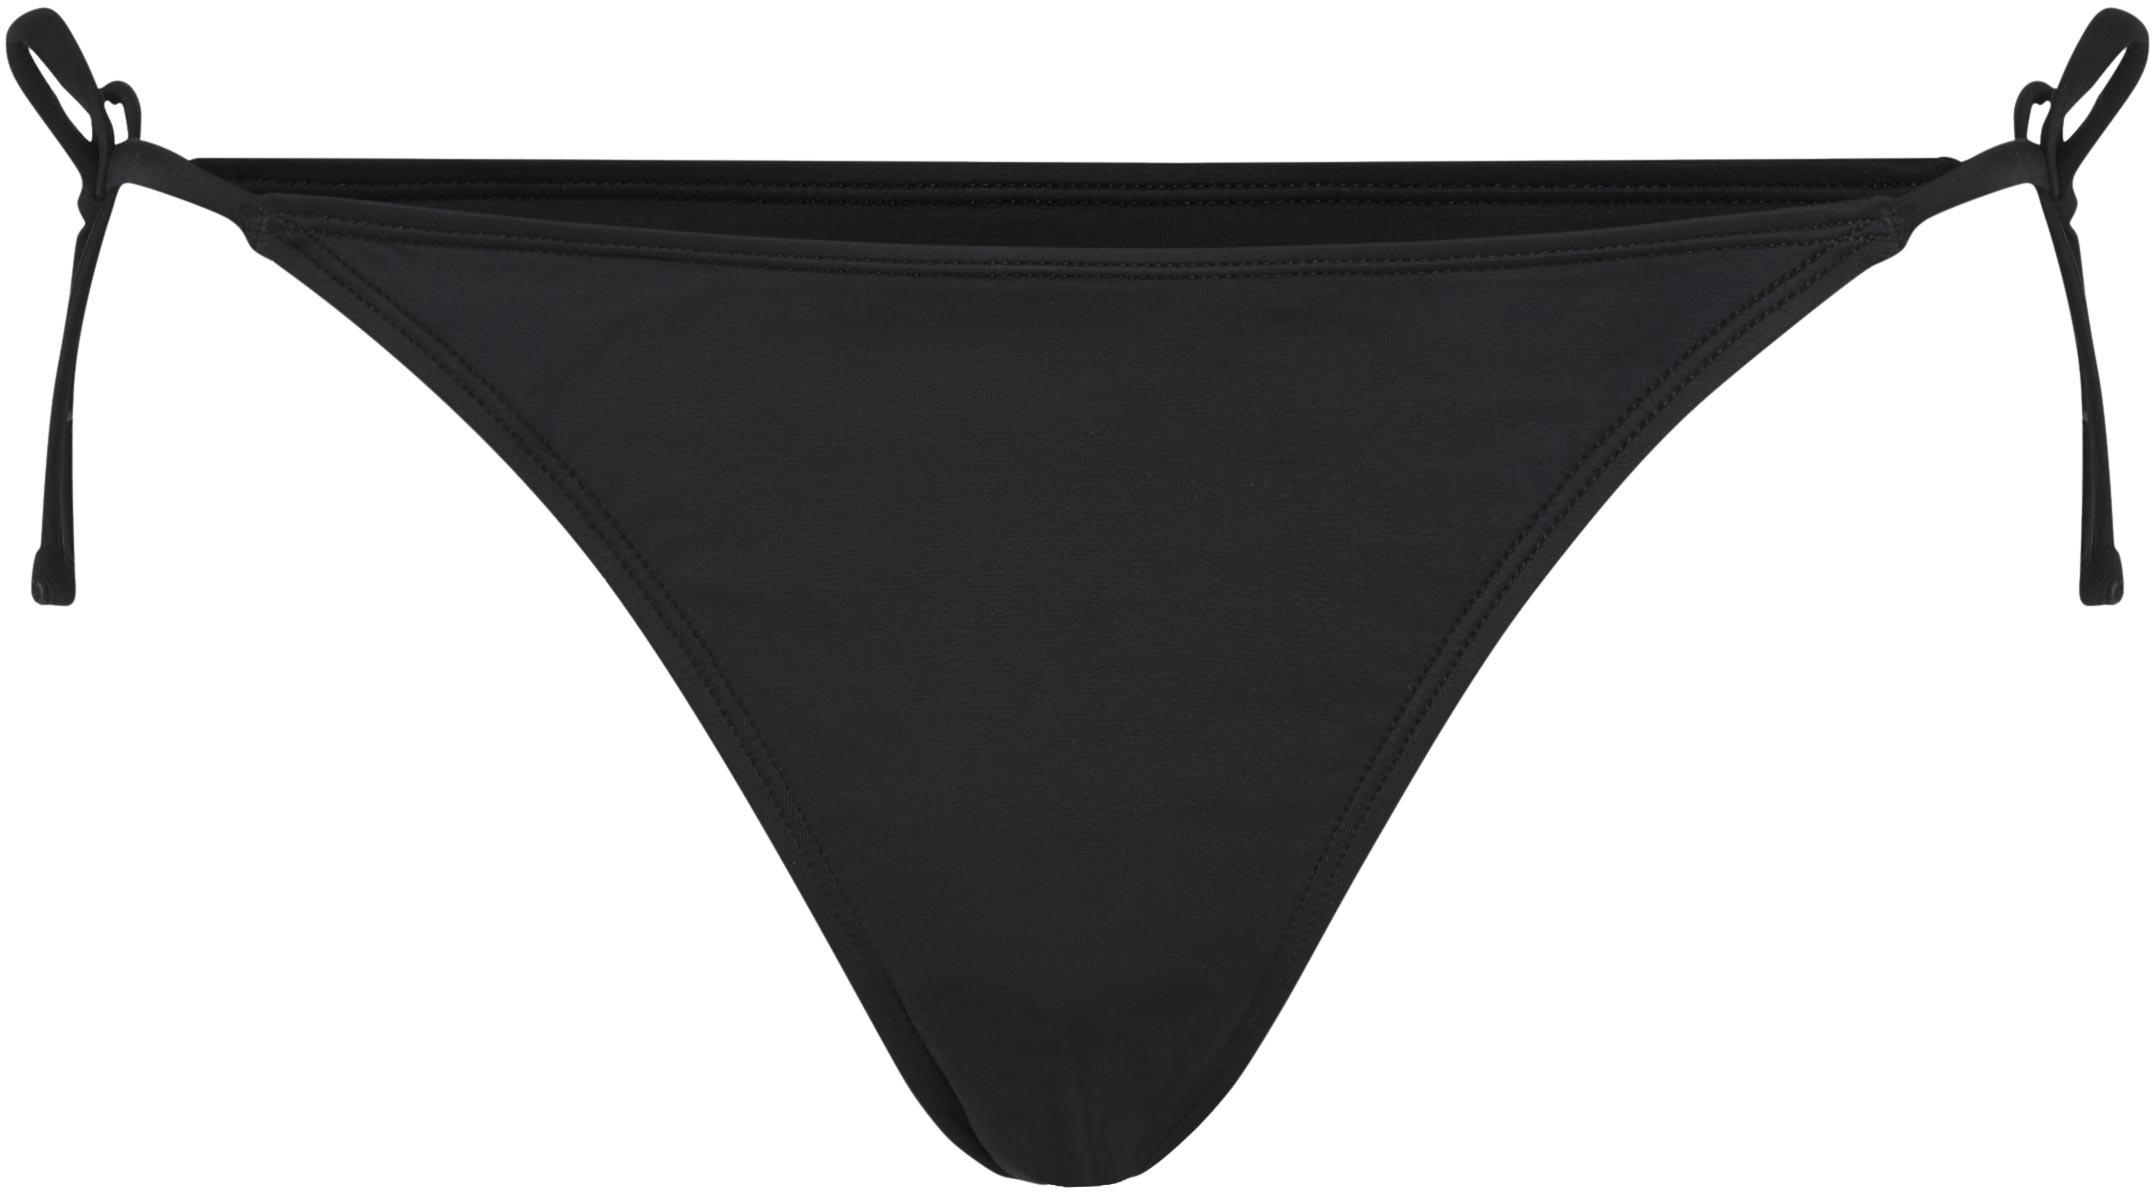 Women's swimsuit bottoms